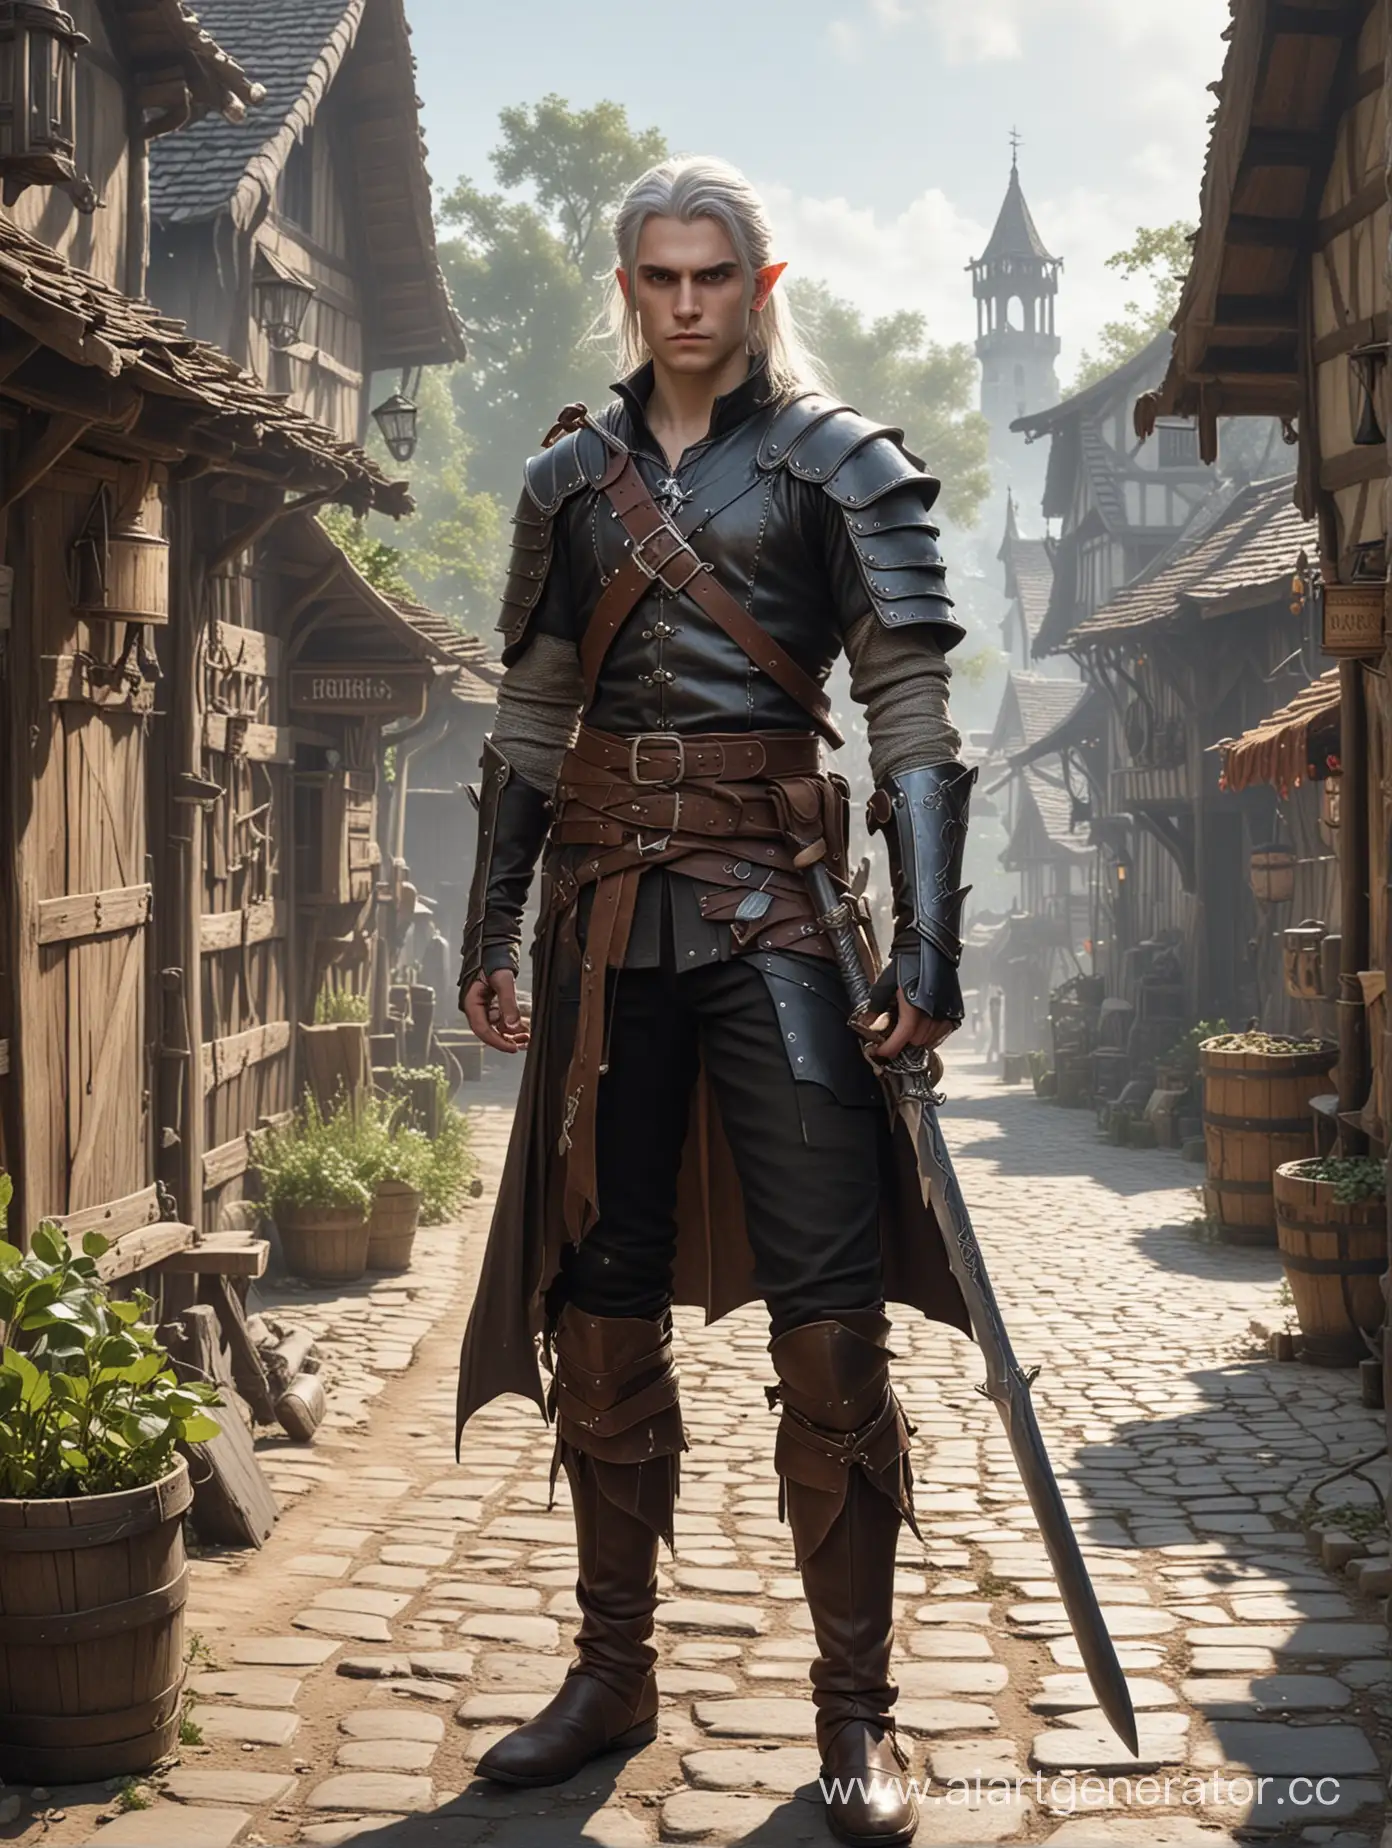 HalfElf-Witcher-in-Leather-Armor-Wielding-Pirate-Sword-Amid-Village